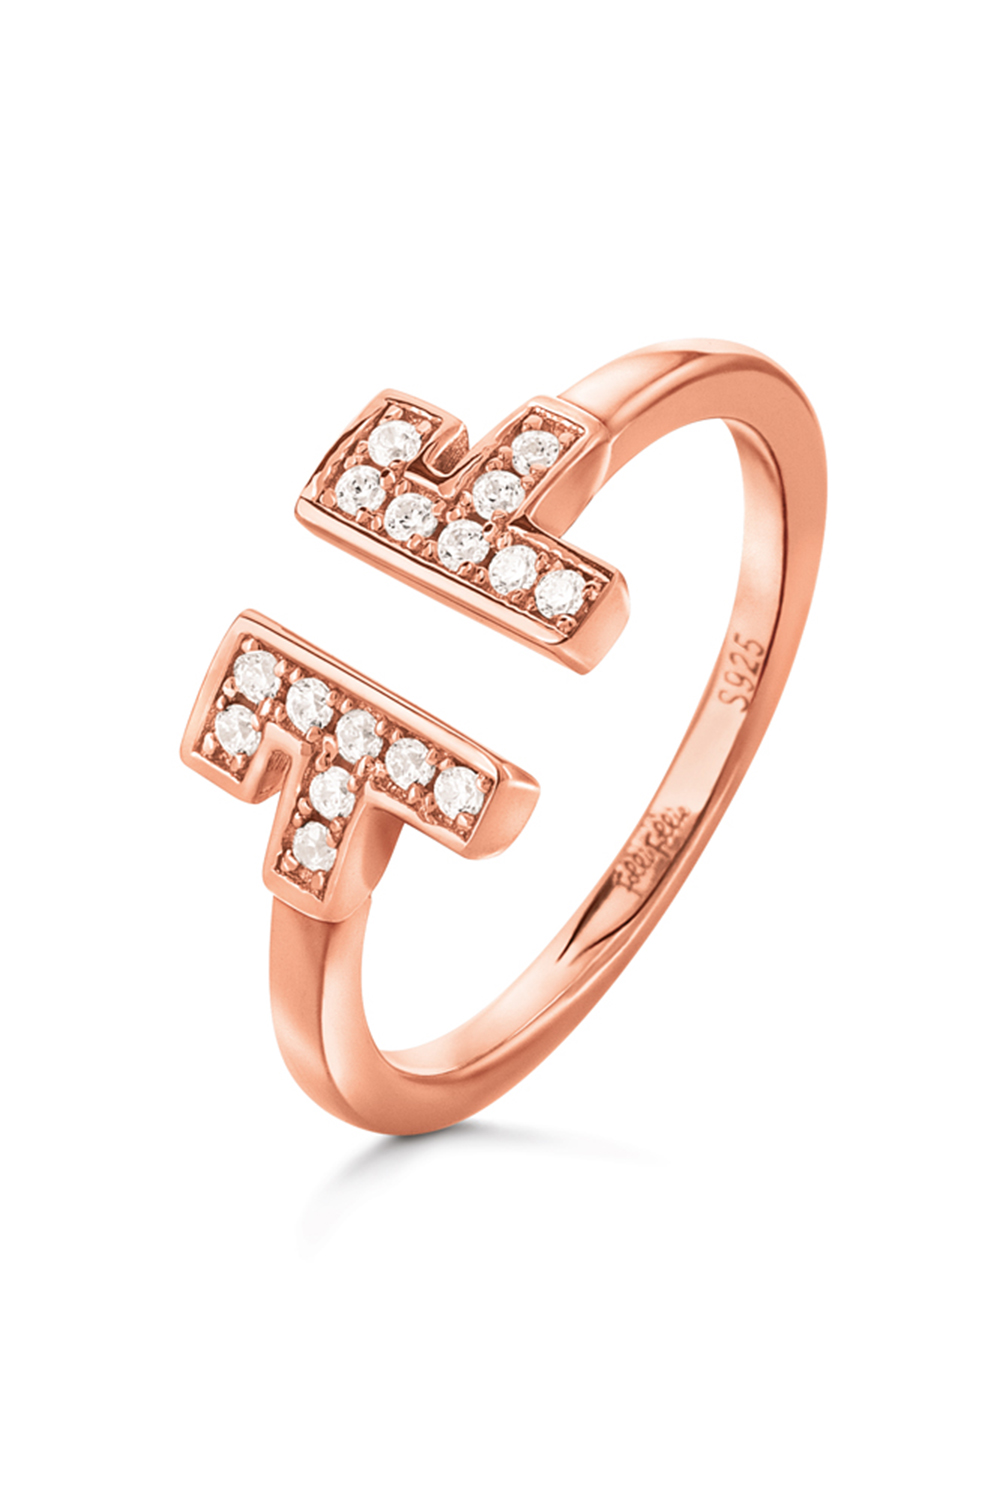 FOLLI FOLLIE – Γυναικειο ασημενιο δαχτυλιδι FOLLI FOLLIE MY FF ροζ χρυσο